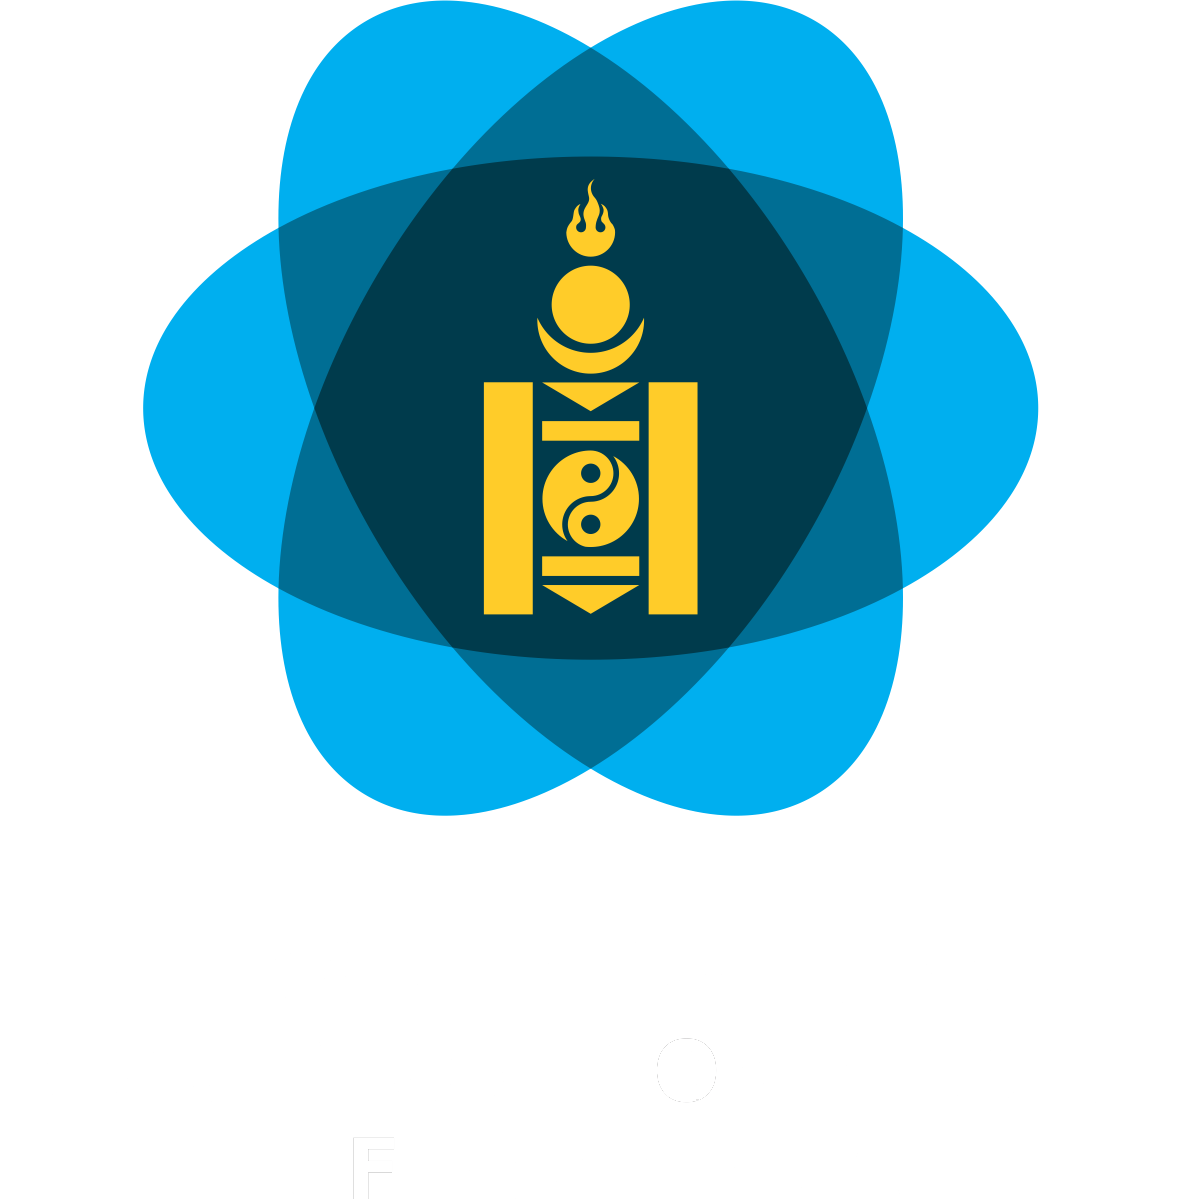 COMMUNICATIONS REGULATORY COMMISSION OF MONGOLIA